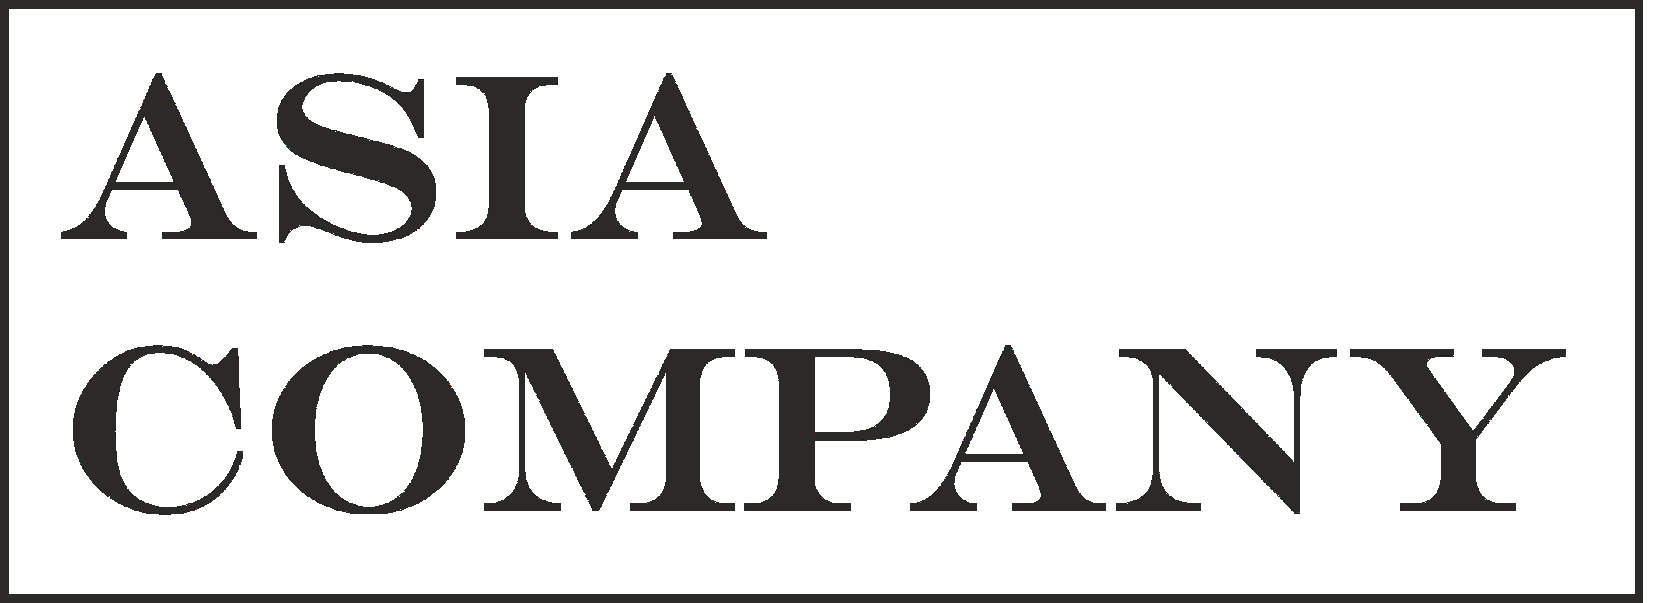 Asia co. Логотип Asia Company. Элайд Ниппон логотип. Компания «Asia ferroalloys». Nano Asia логотип.